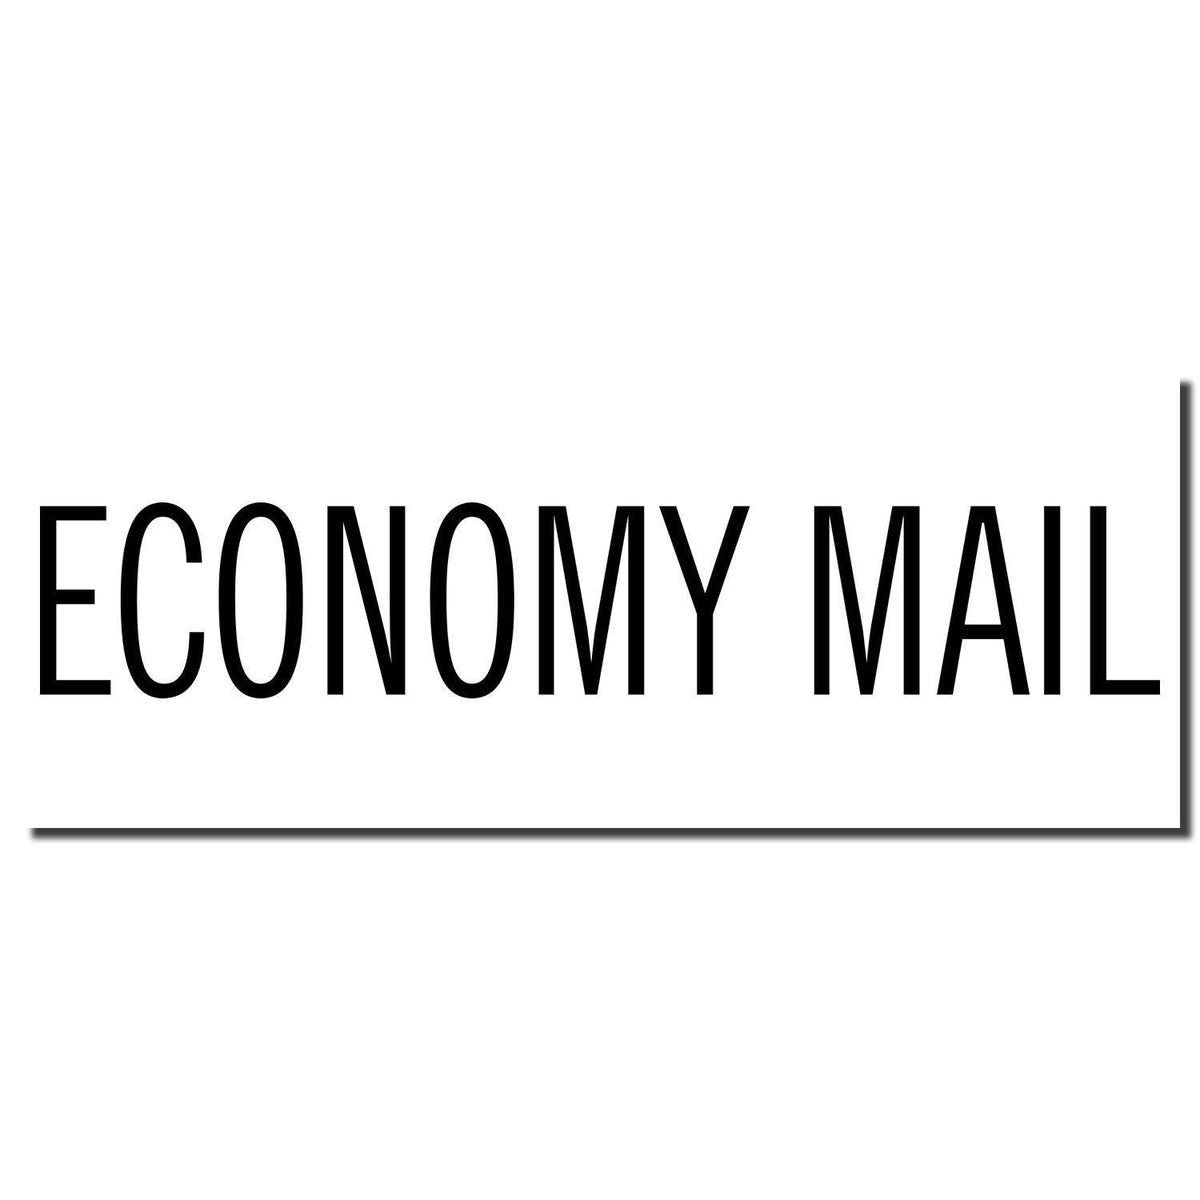 Enlarged Imprint Large Pre-Inked Economy Mail Stamp Sample